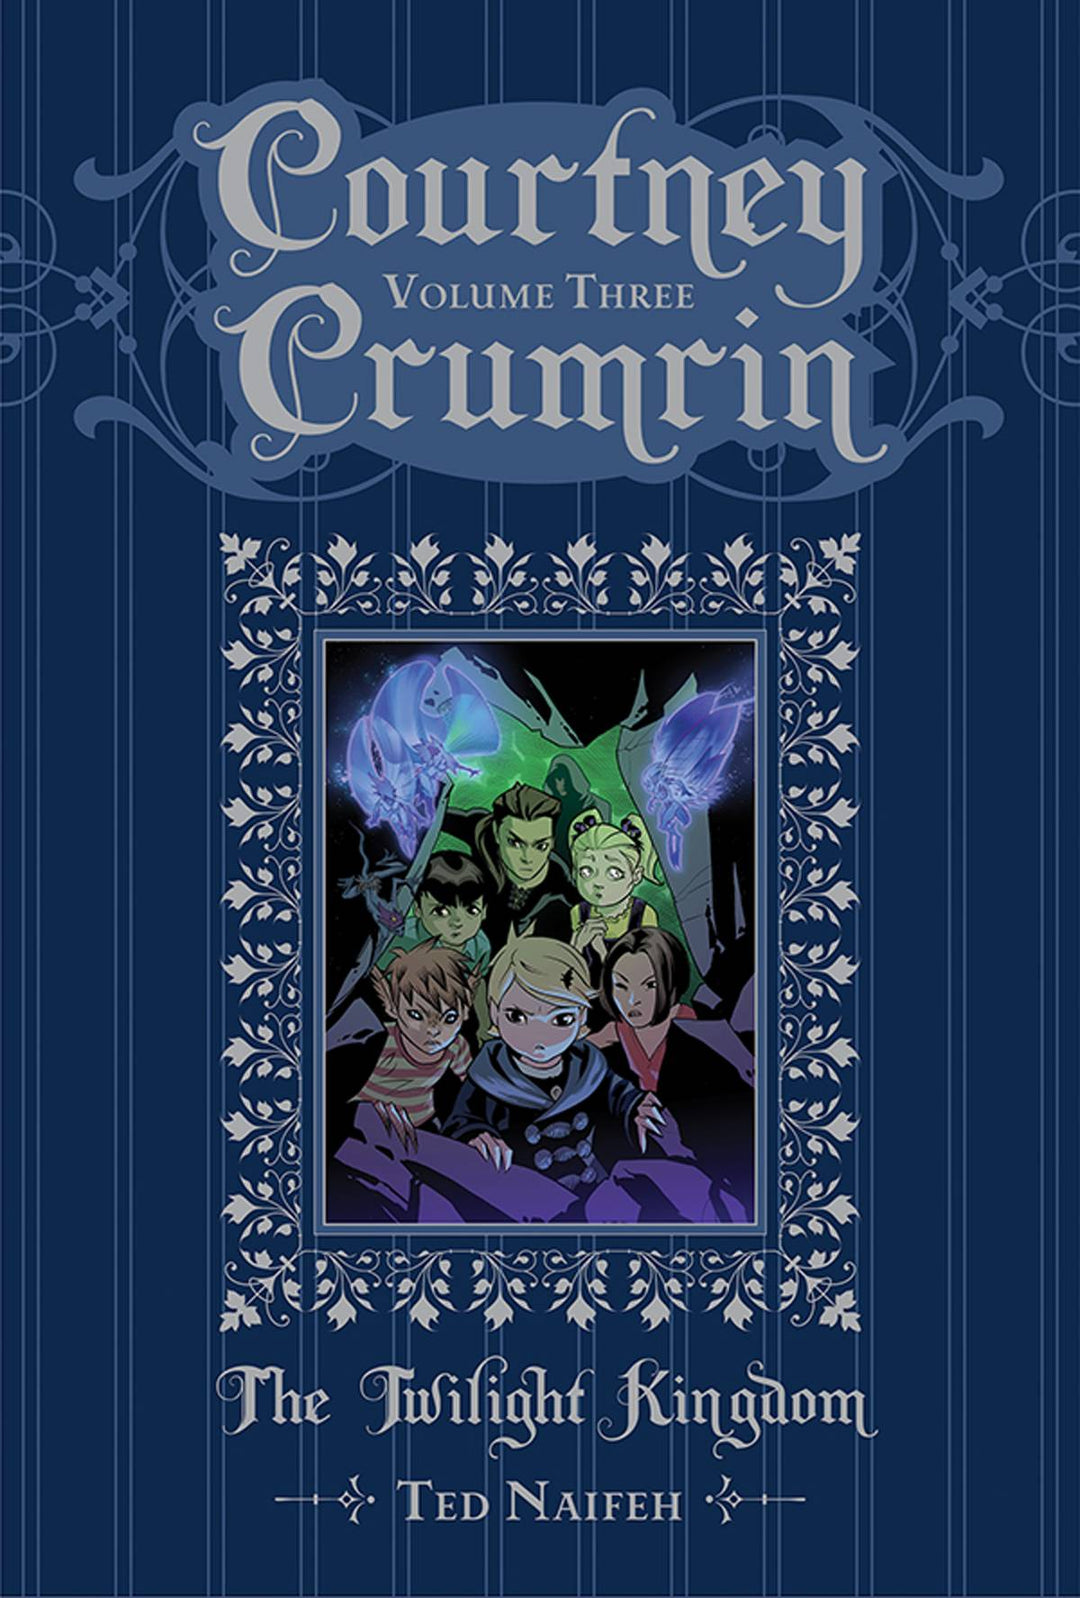 Courtney Crumrin Spec Edition Hardcover Volume 03